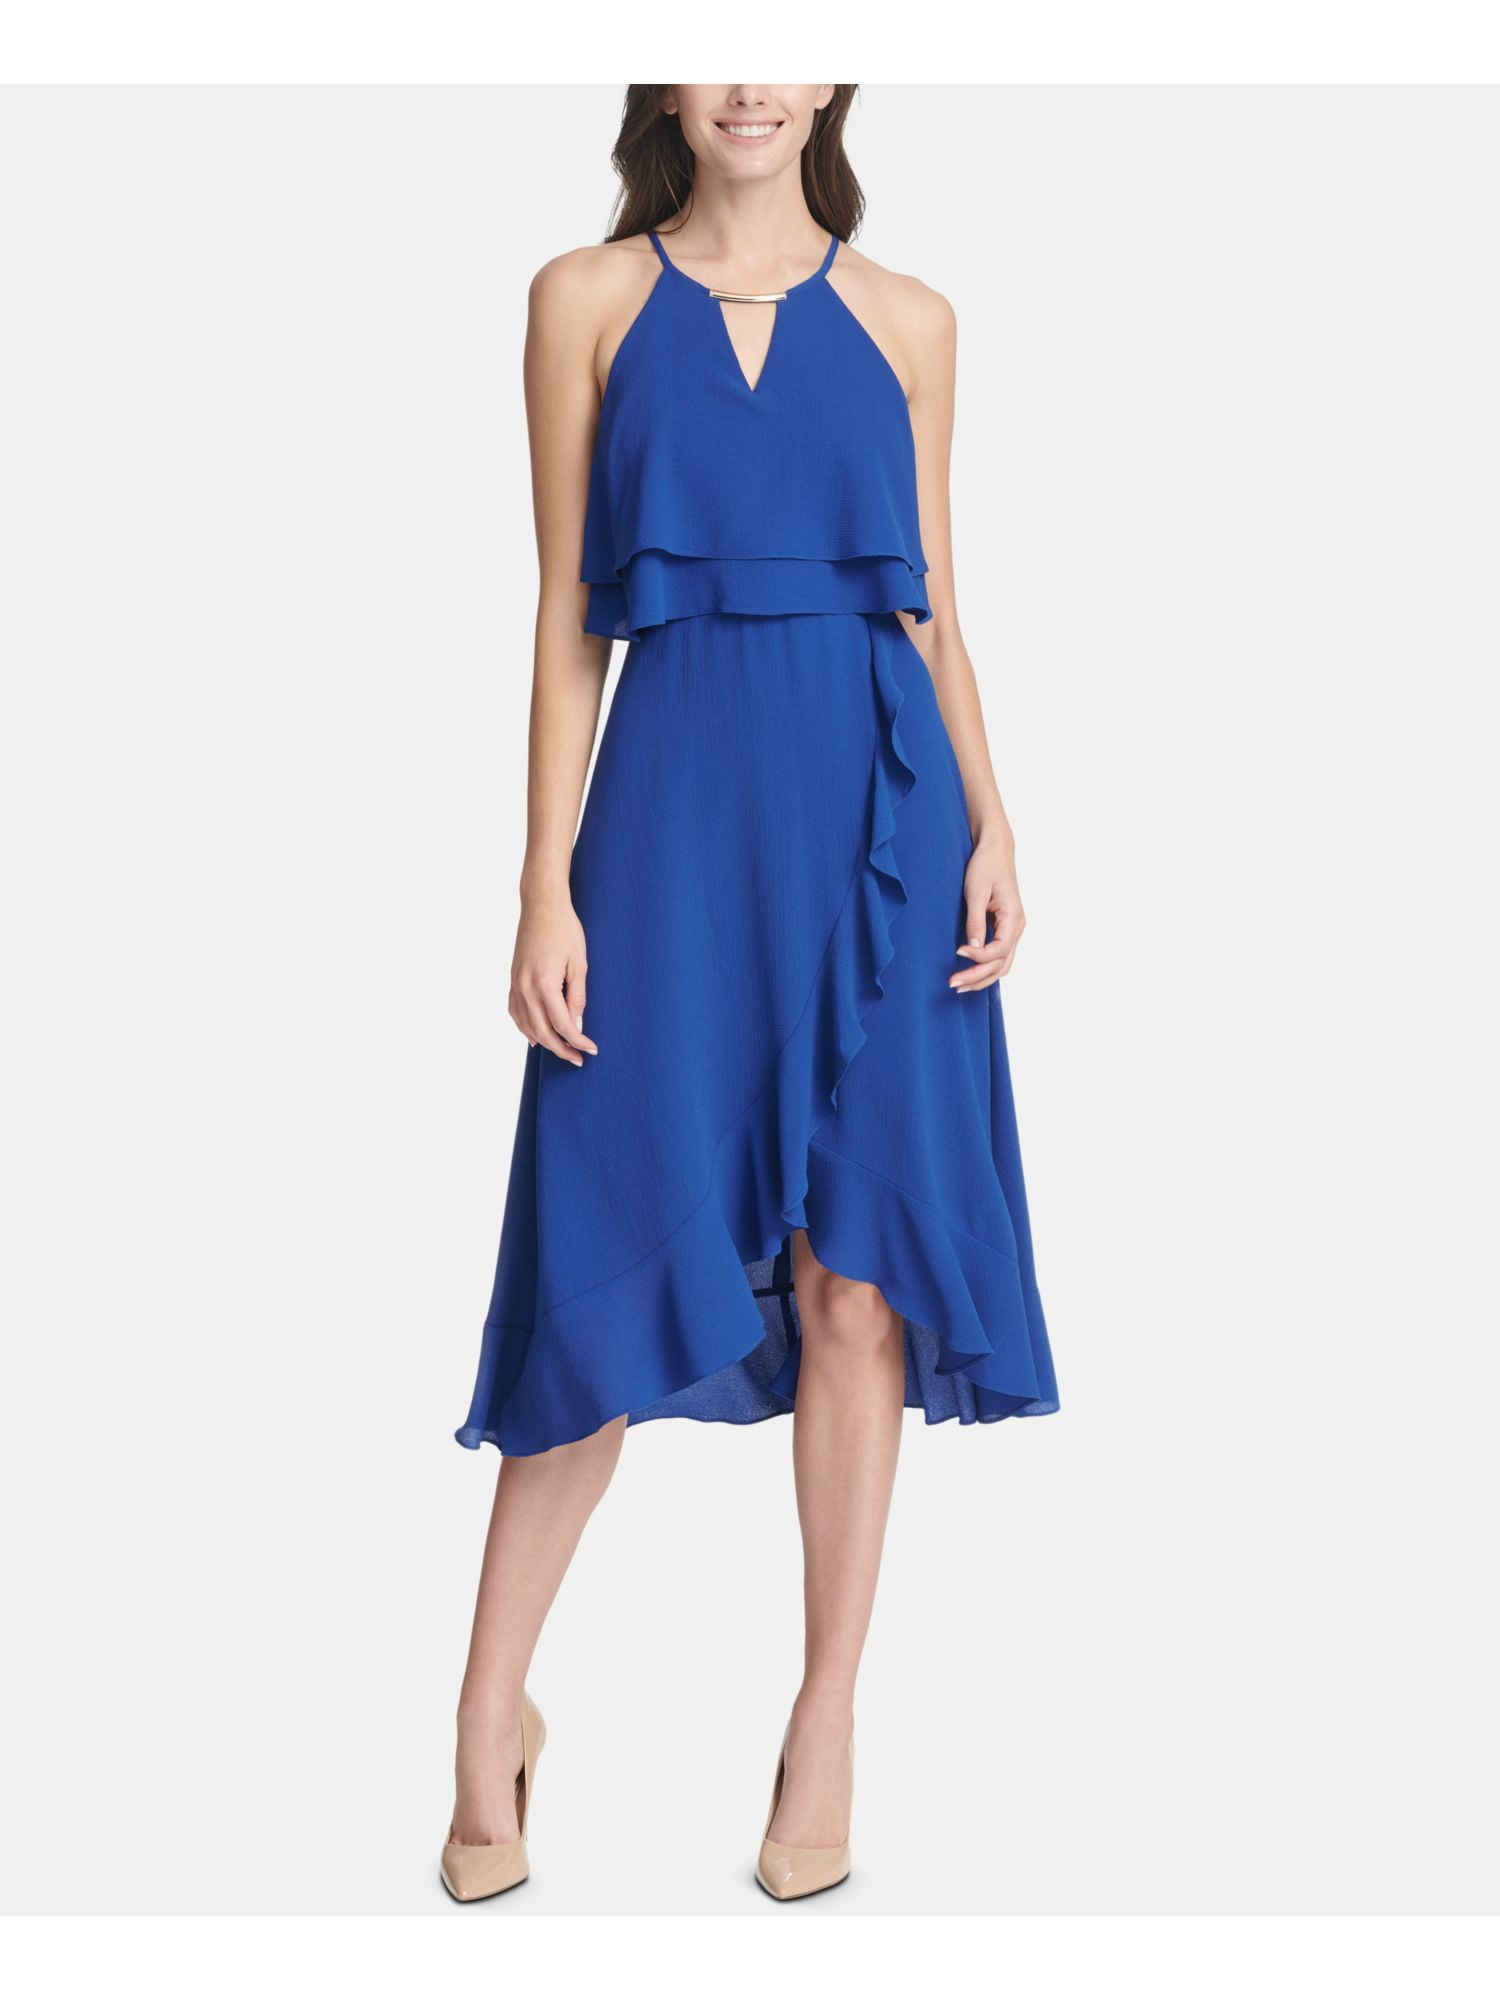 KENSIE DRESSES Womens Blue Halter Knee Length Party Hi-Lo Dress 4 ...